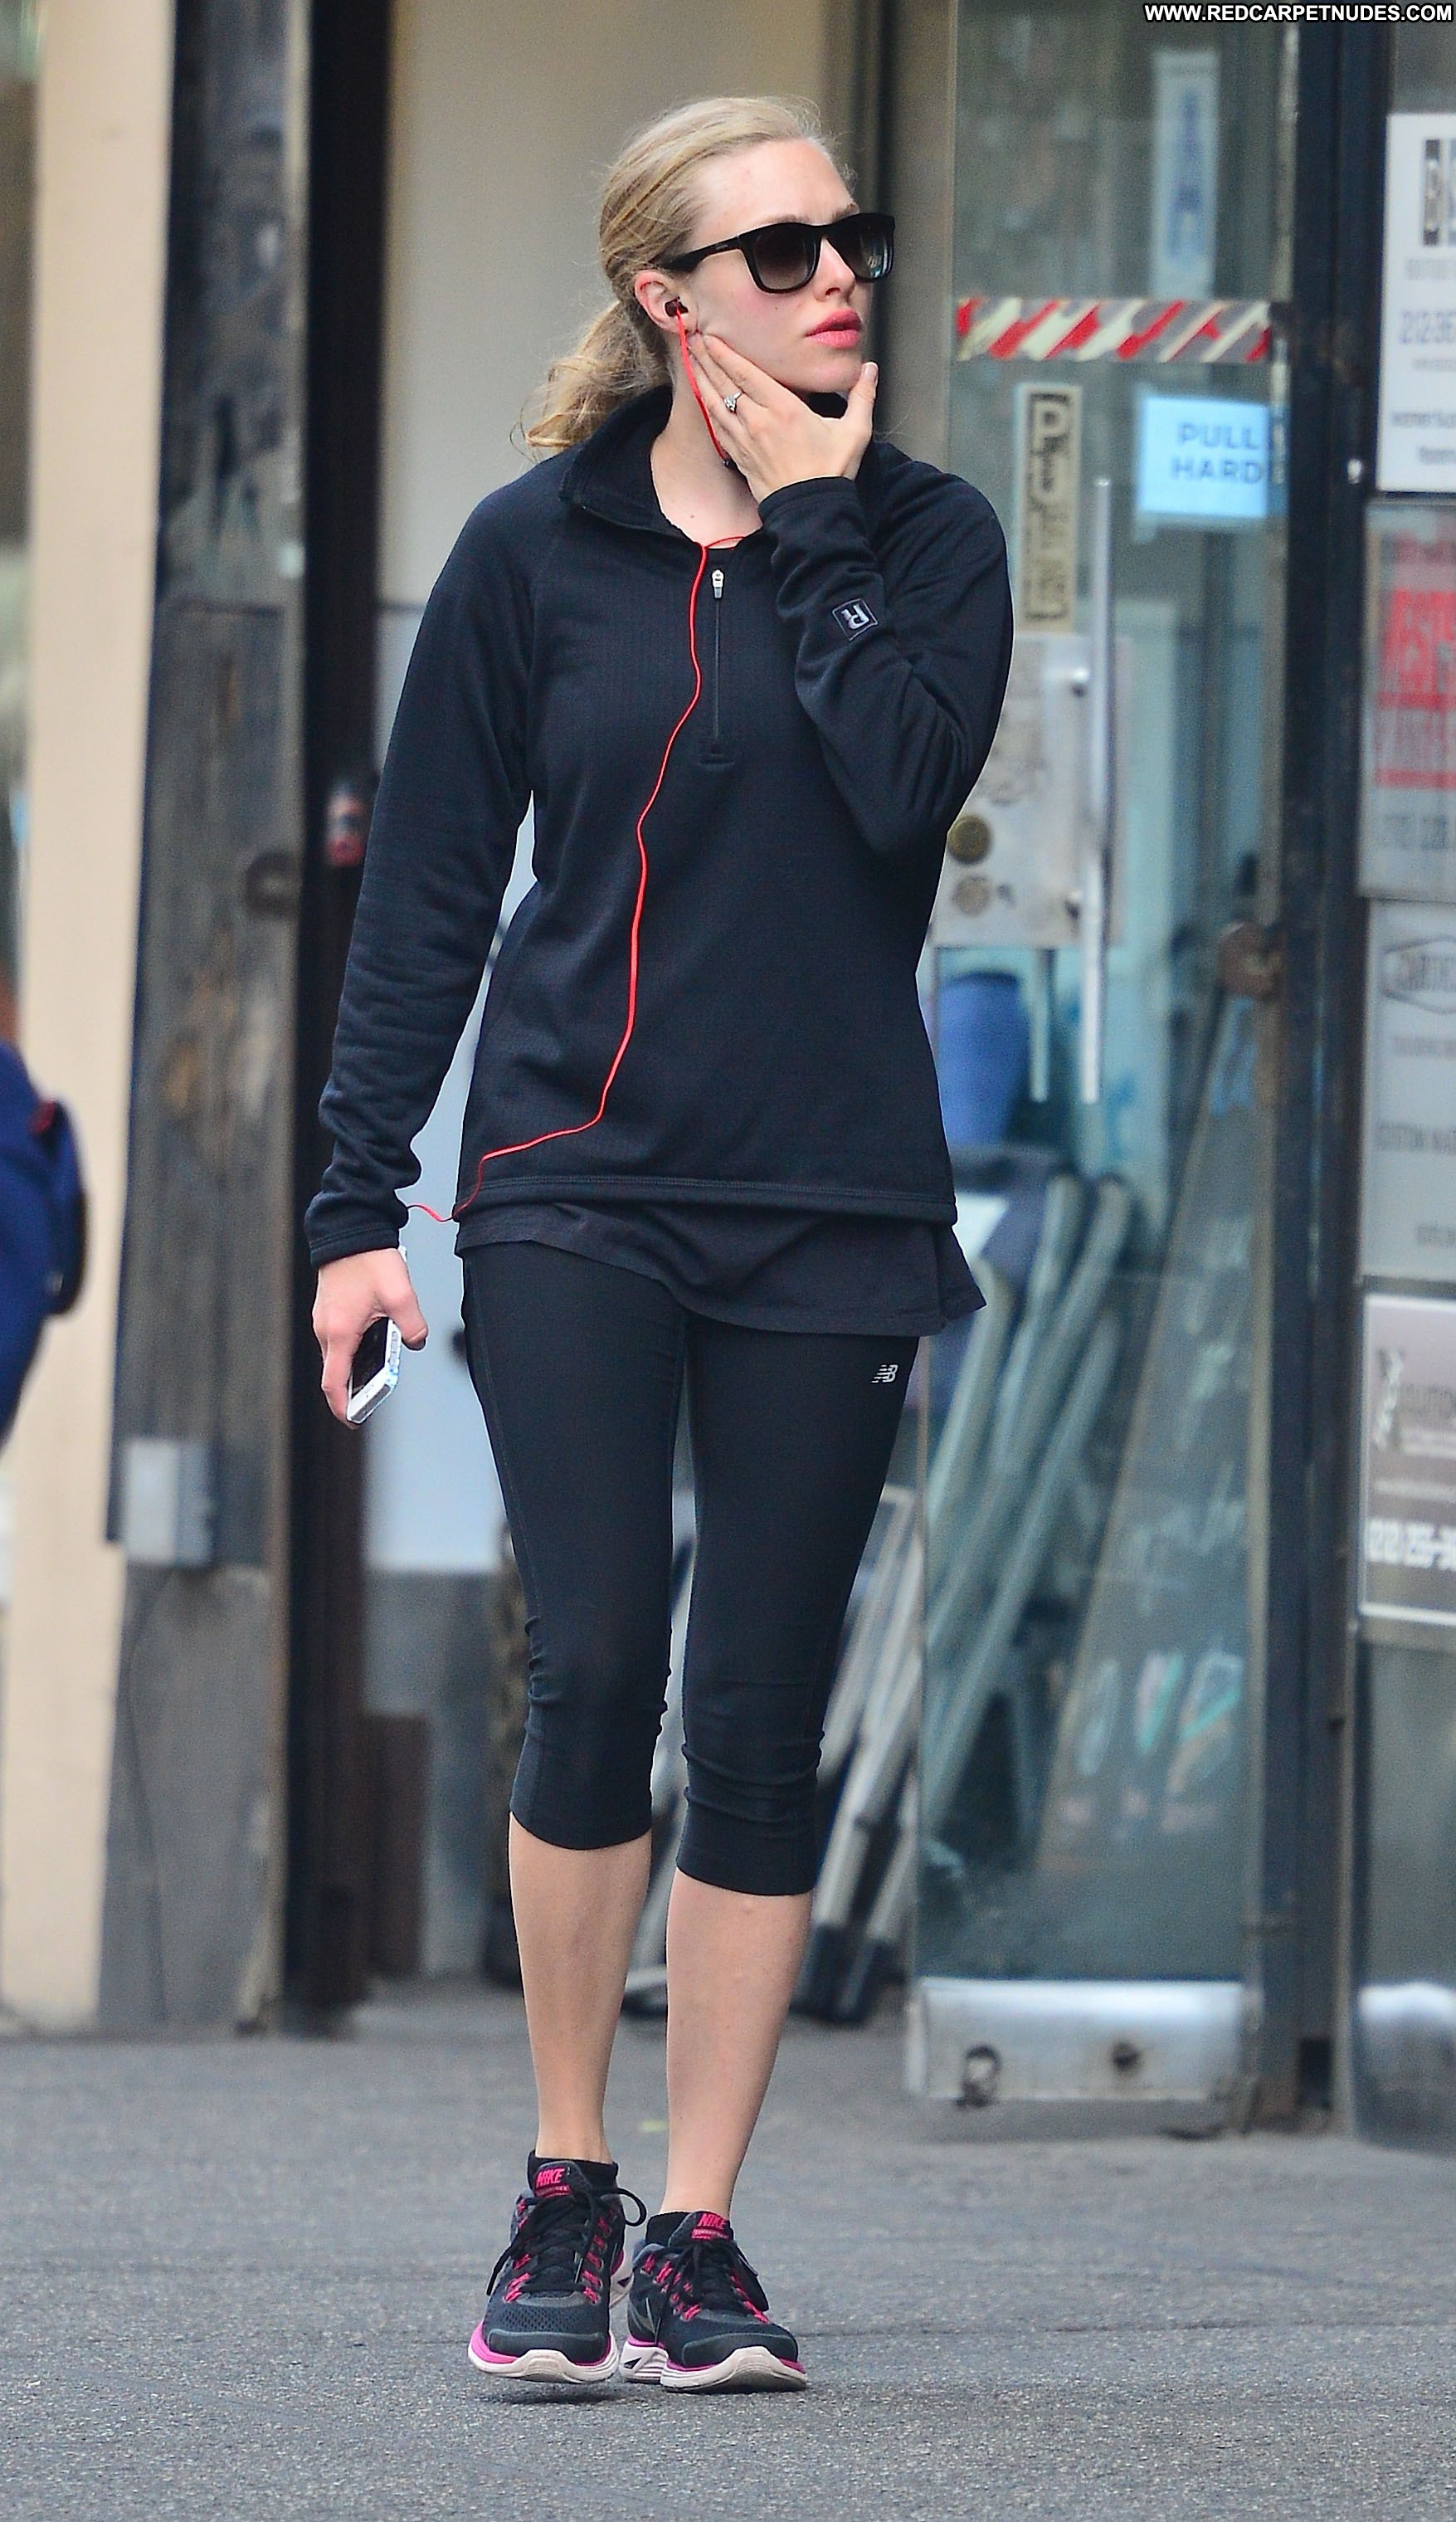 Amanda Seyfried No Source Celebrity Beautiful Babe Posing Hot Jogging ...